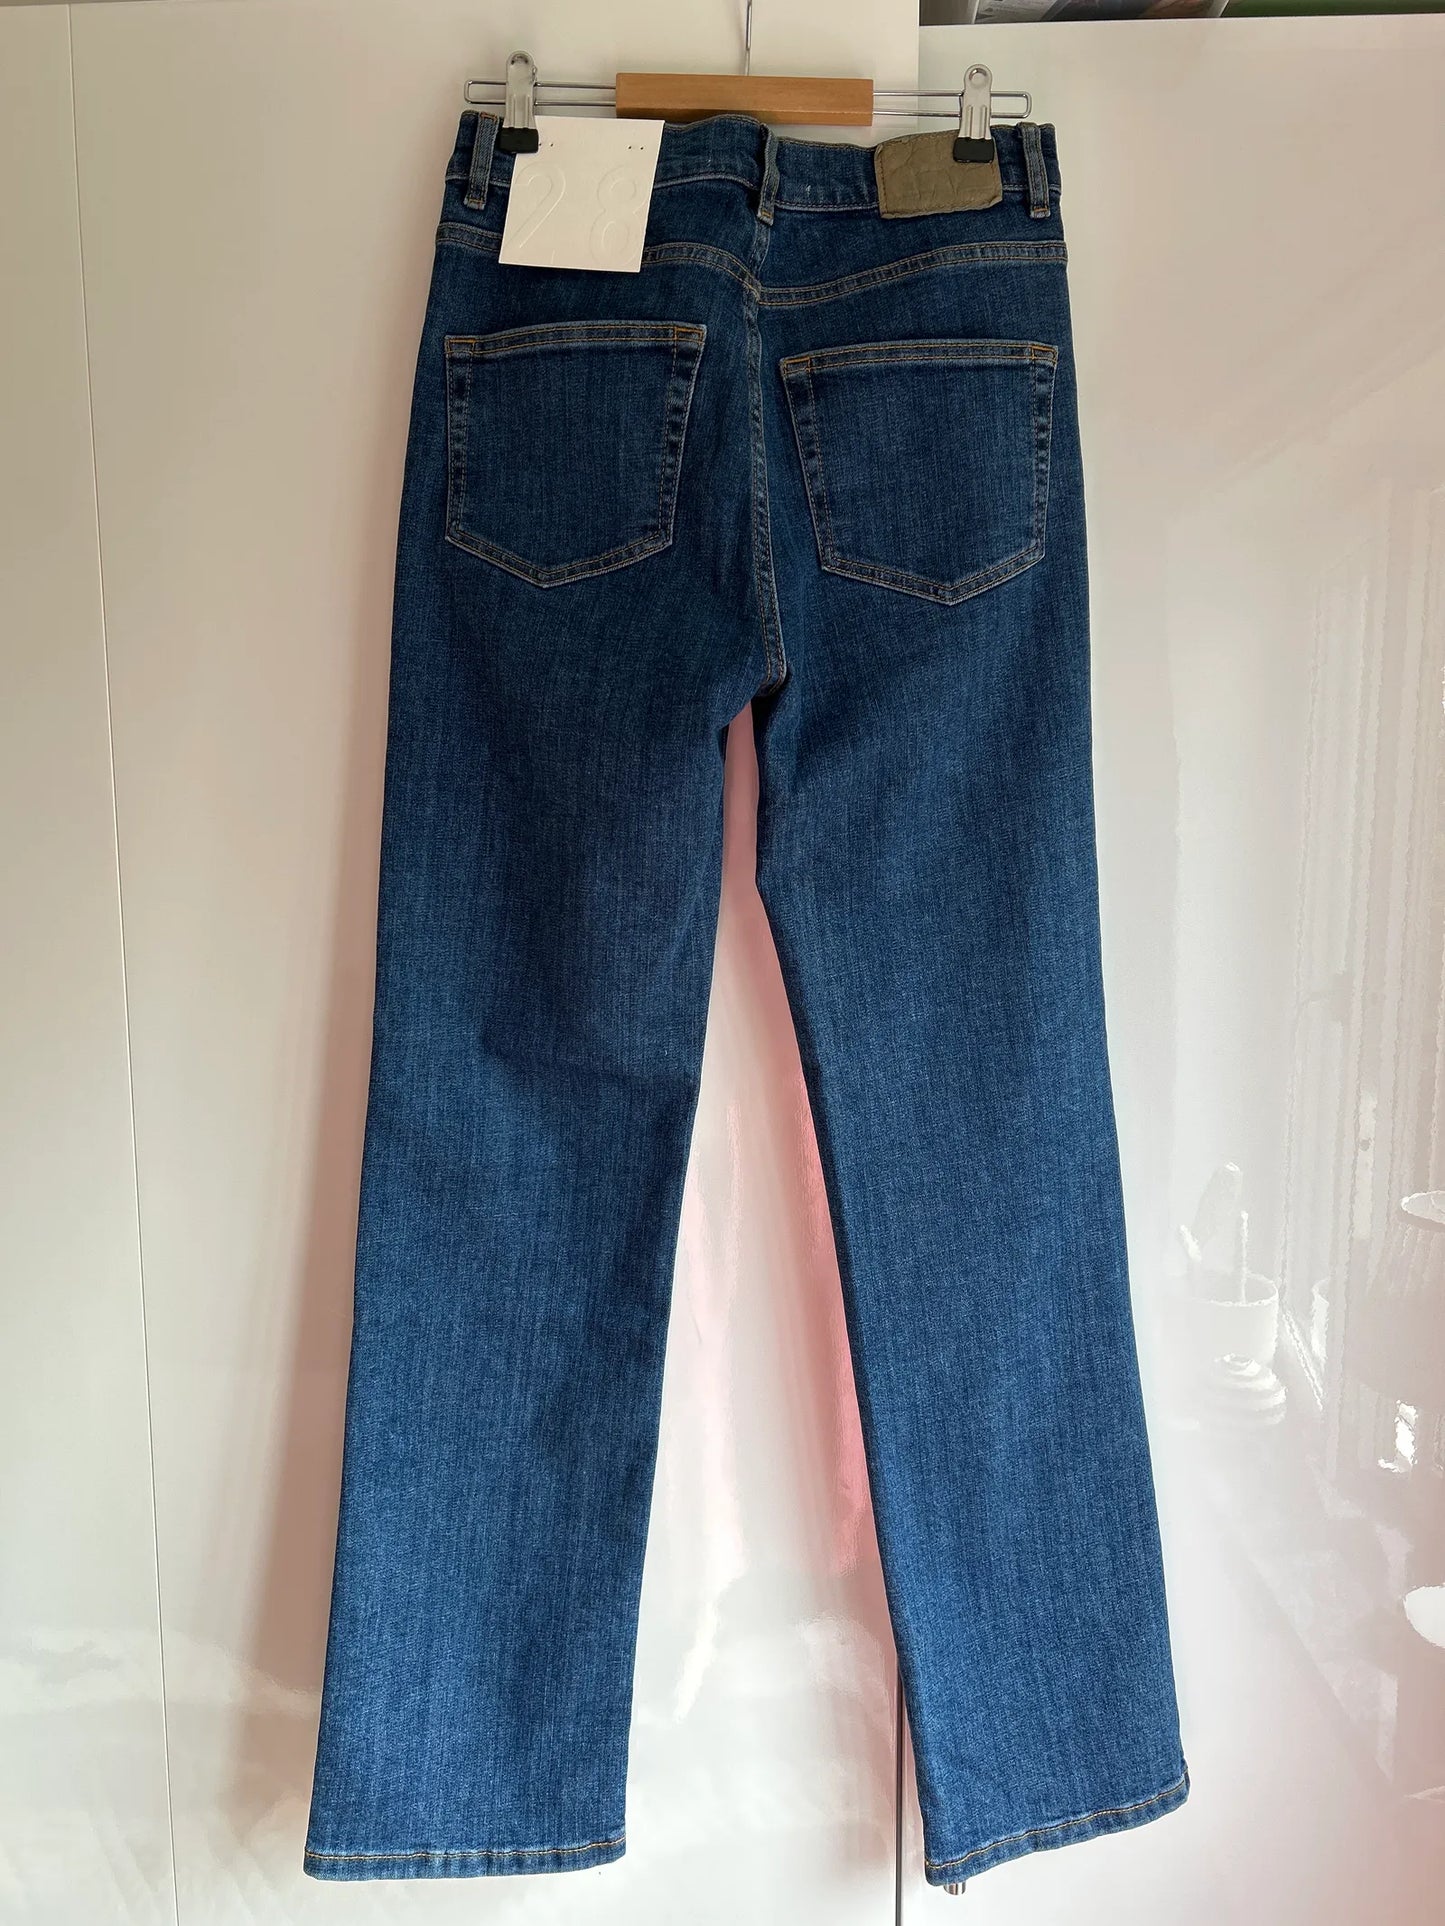 Jeanerica Ew004 Eiffel Vintage 95-jeans NWT